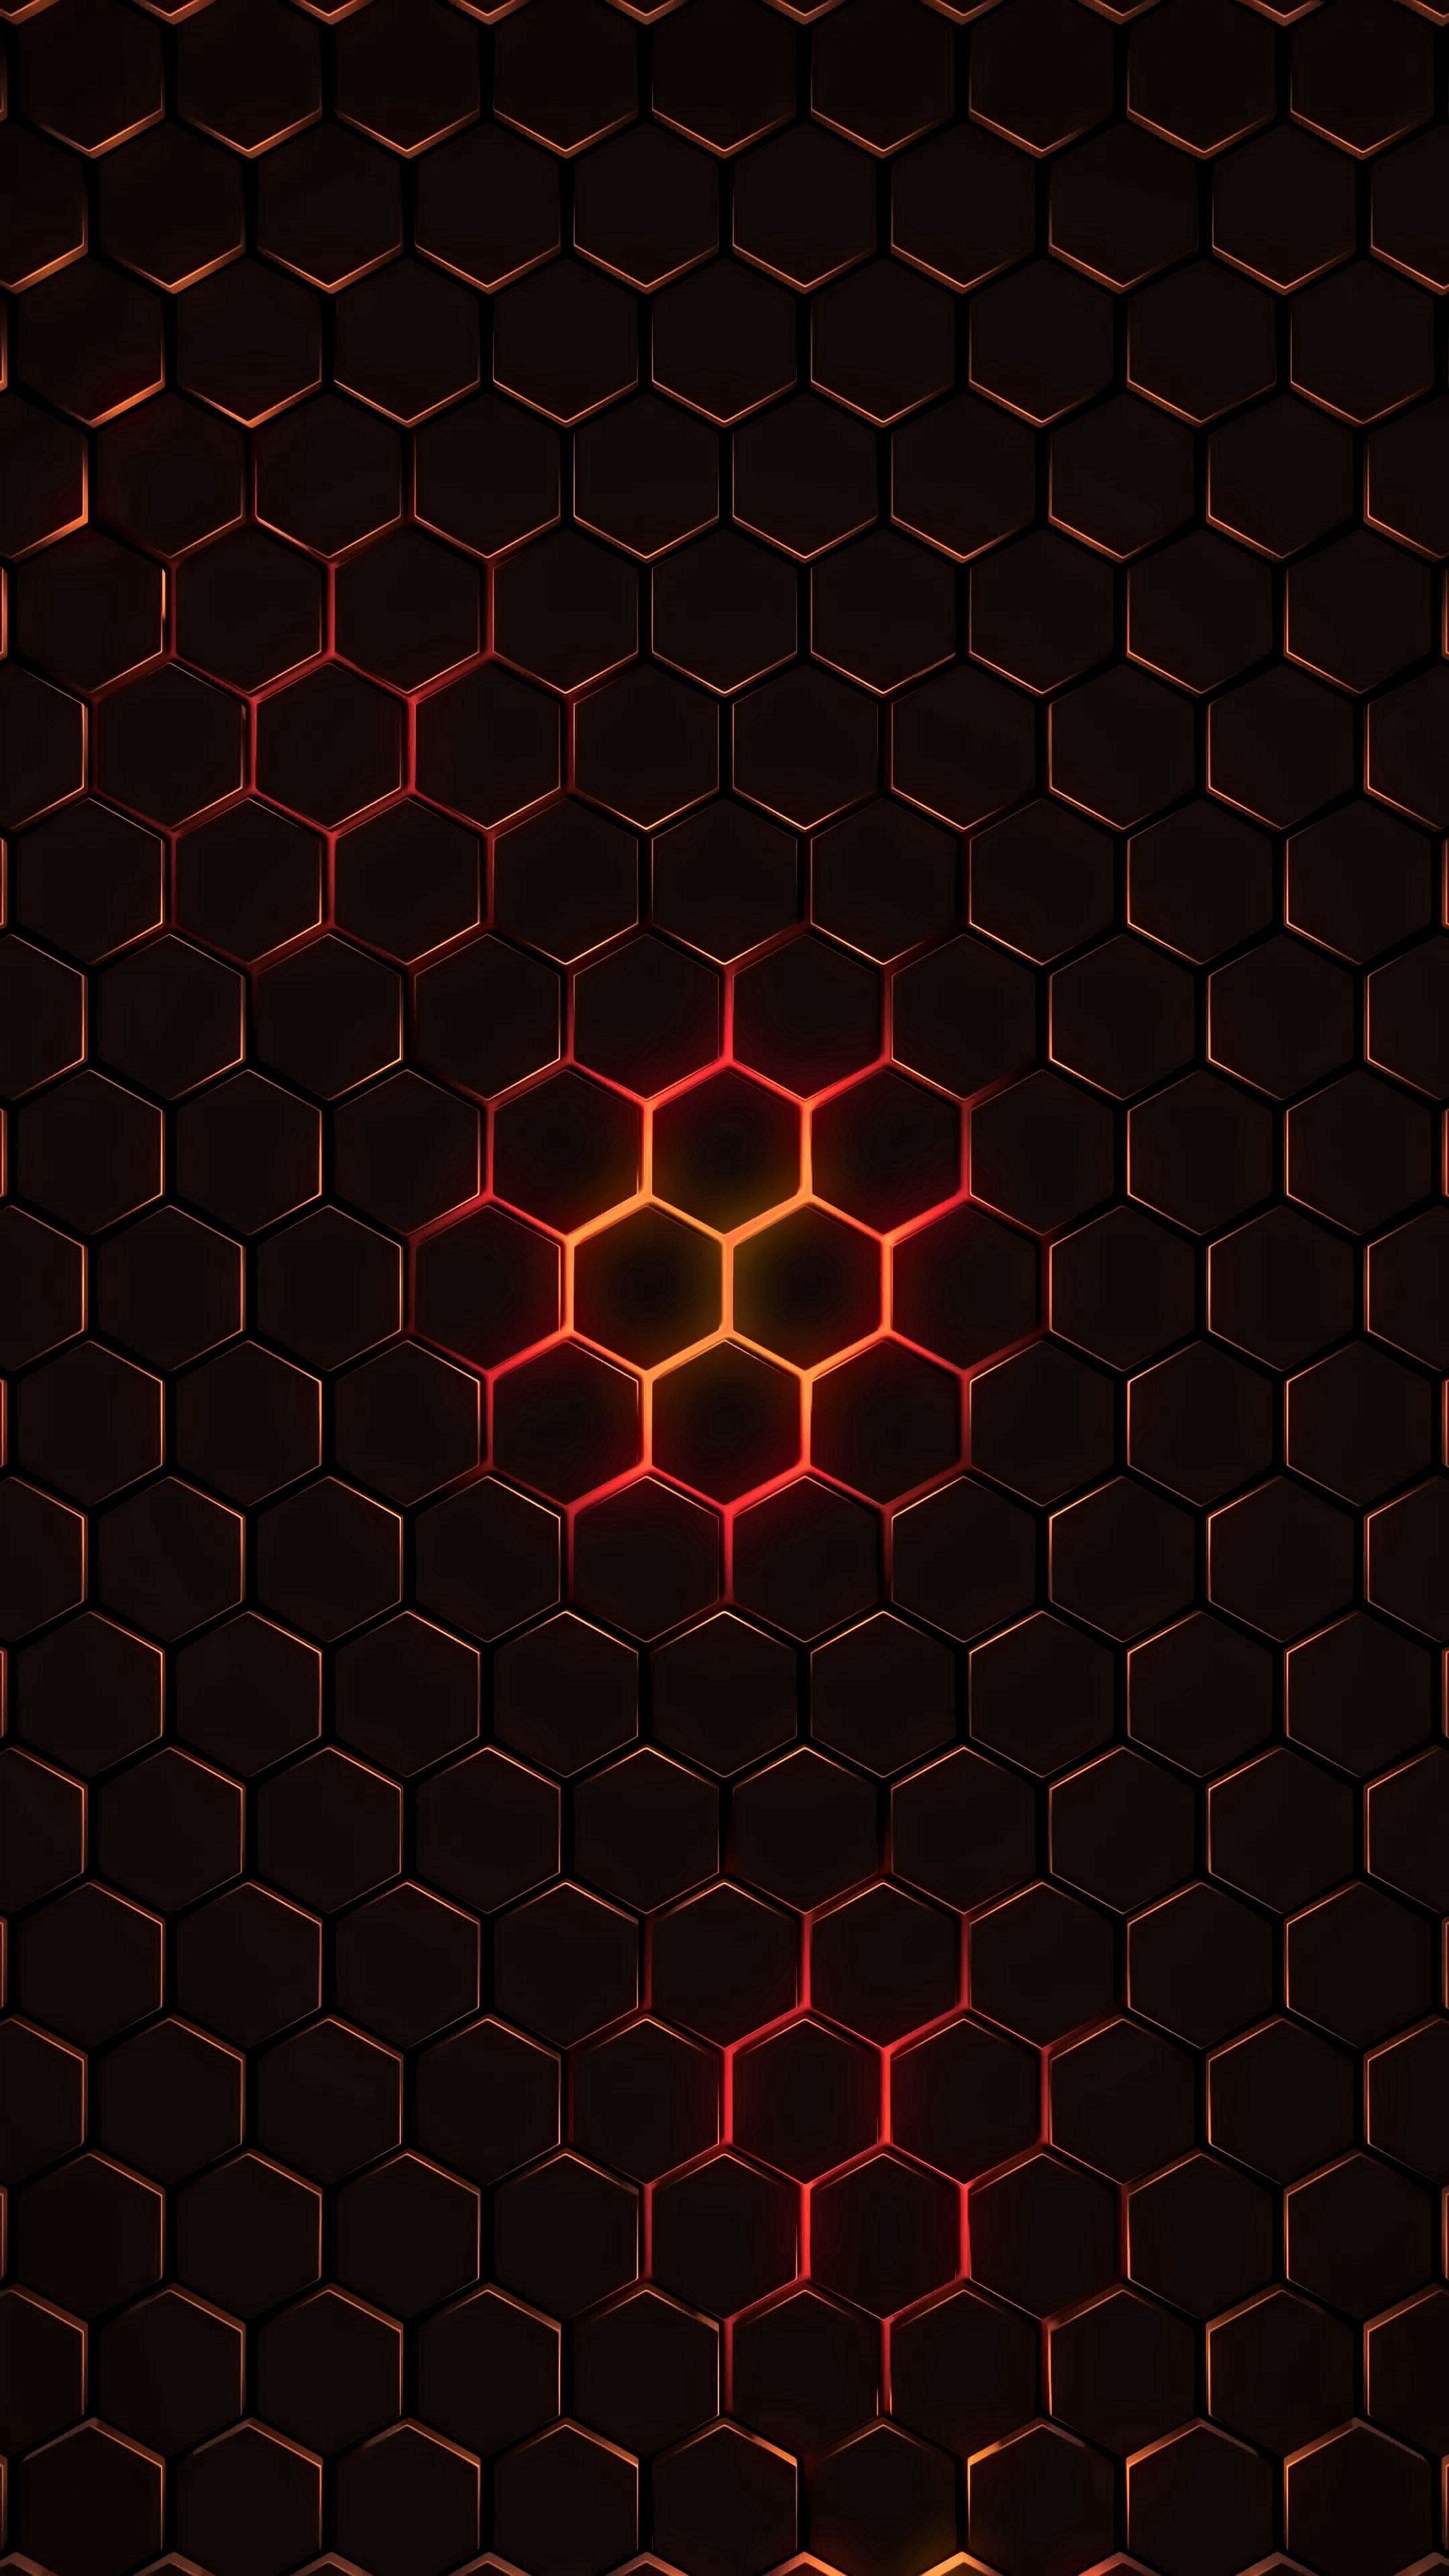 glow, abstract, texture, cell, dark, hexagons, hexagonals, cells 1080p